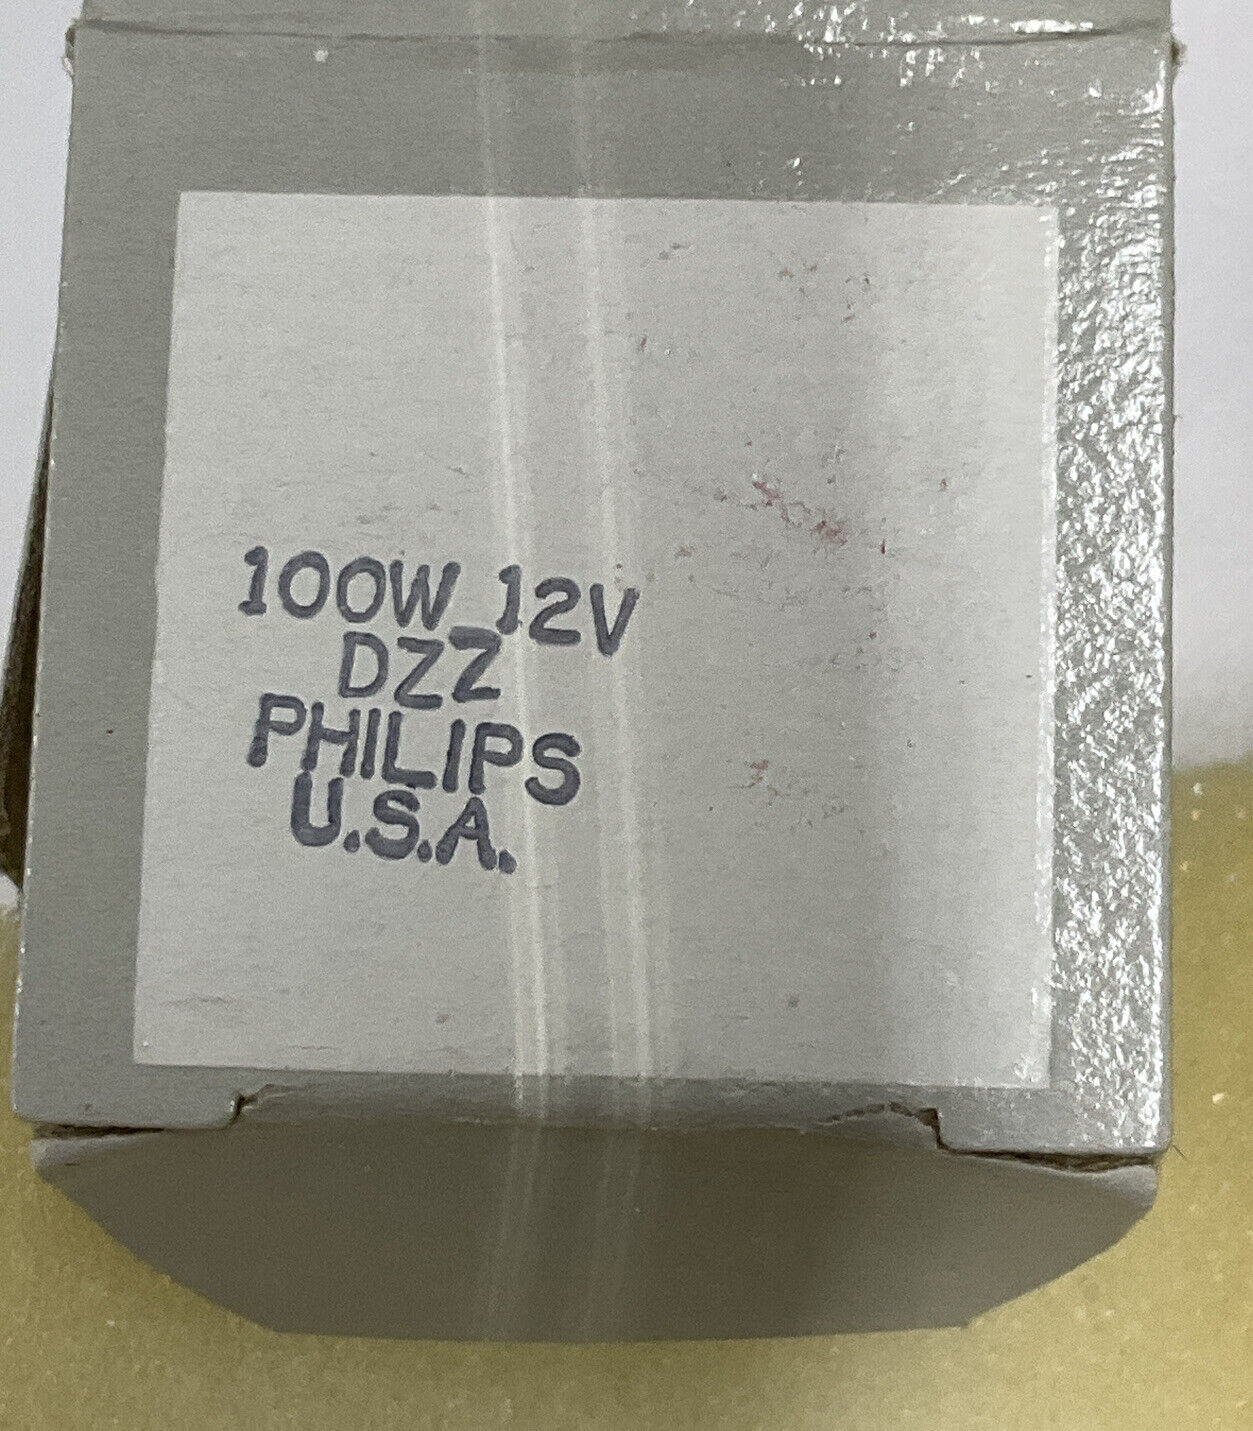 Philips DZZ 100W 12V Projection Lamp / Bulb (GR231)